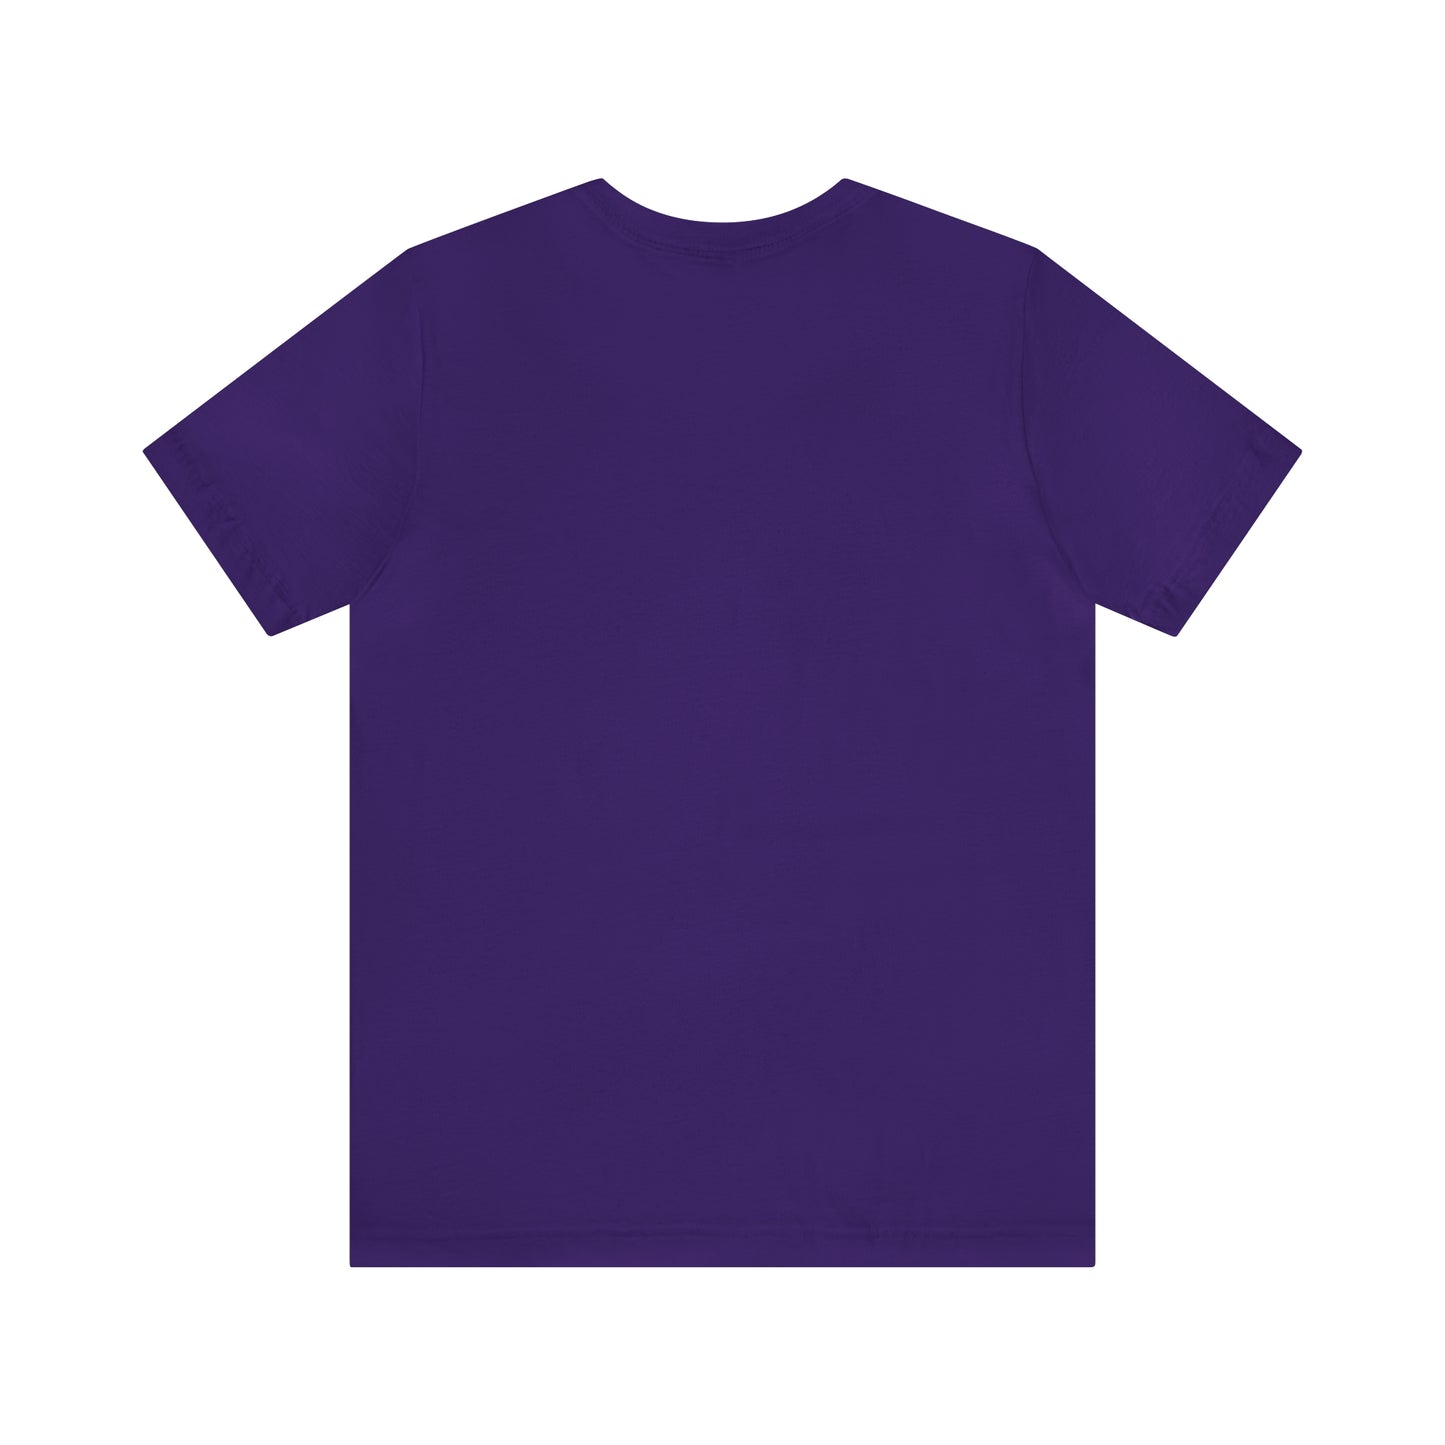 Purple Halloween Batty Shirt / "Happy Halloween" Shirt / Cute Halloween Shirt